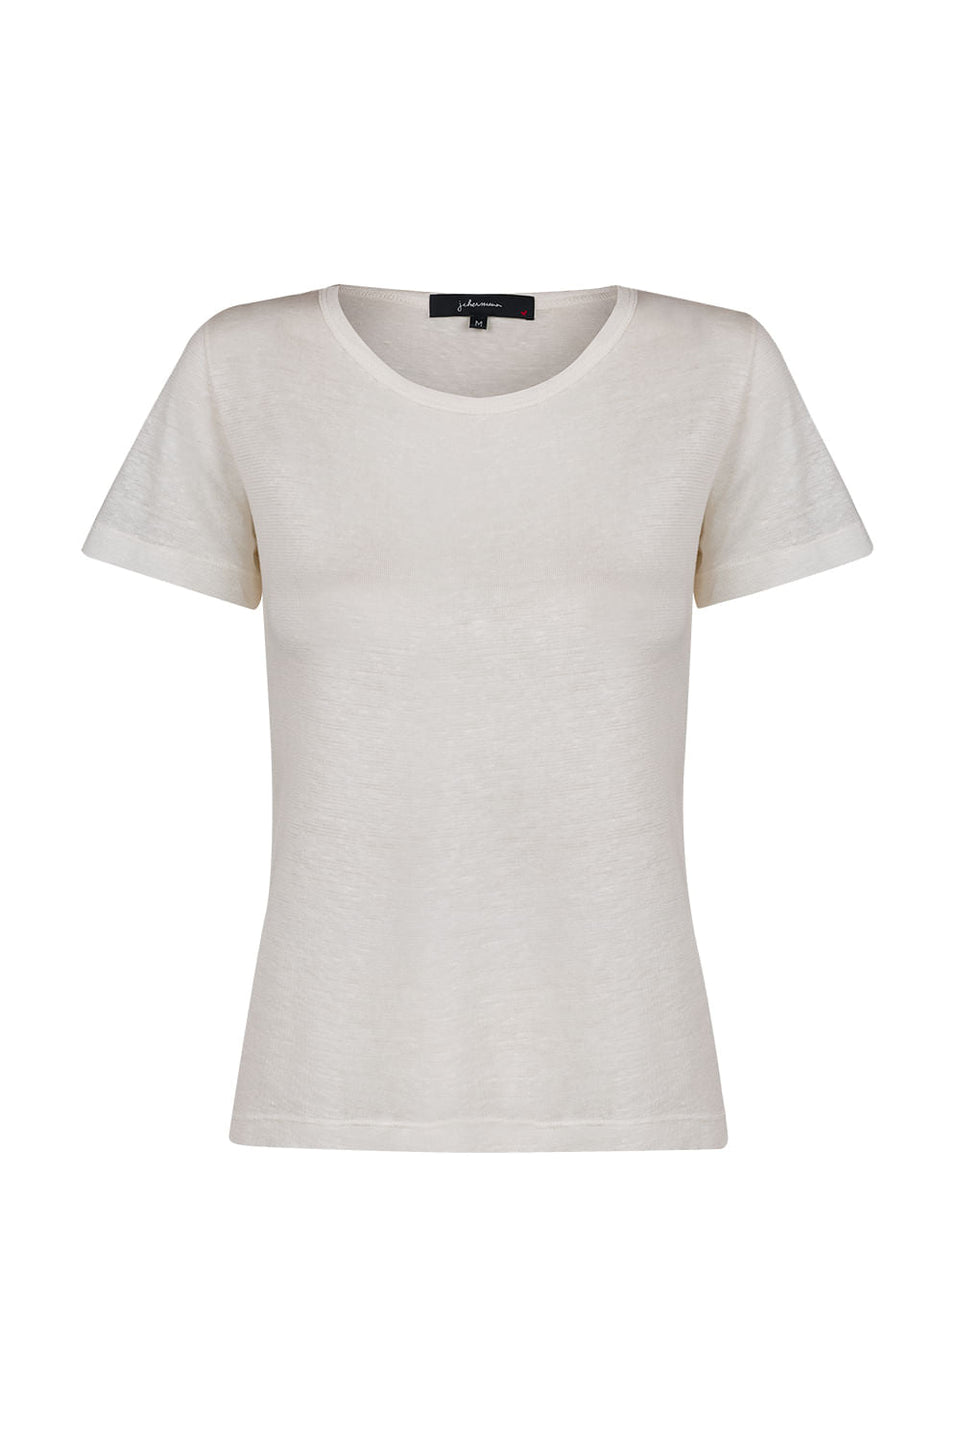 Camiseta Perfect Basic Freshlinho Branca